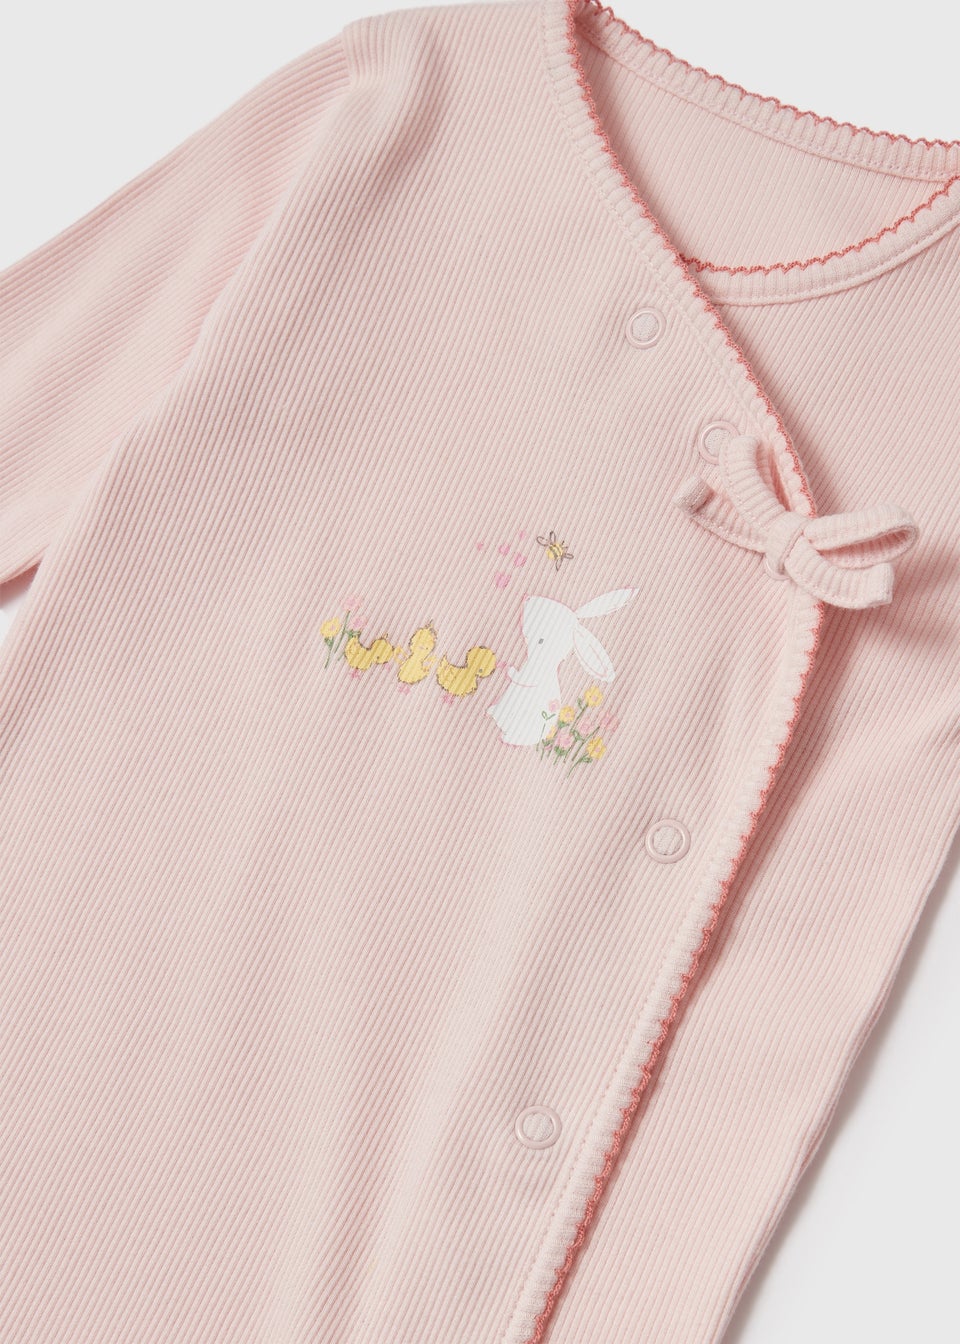 Baby Pink Meadow Sleepsuit (Newborn-18mths)